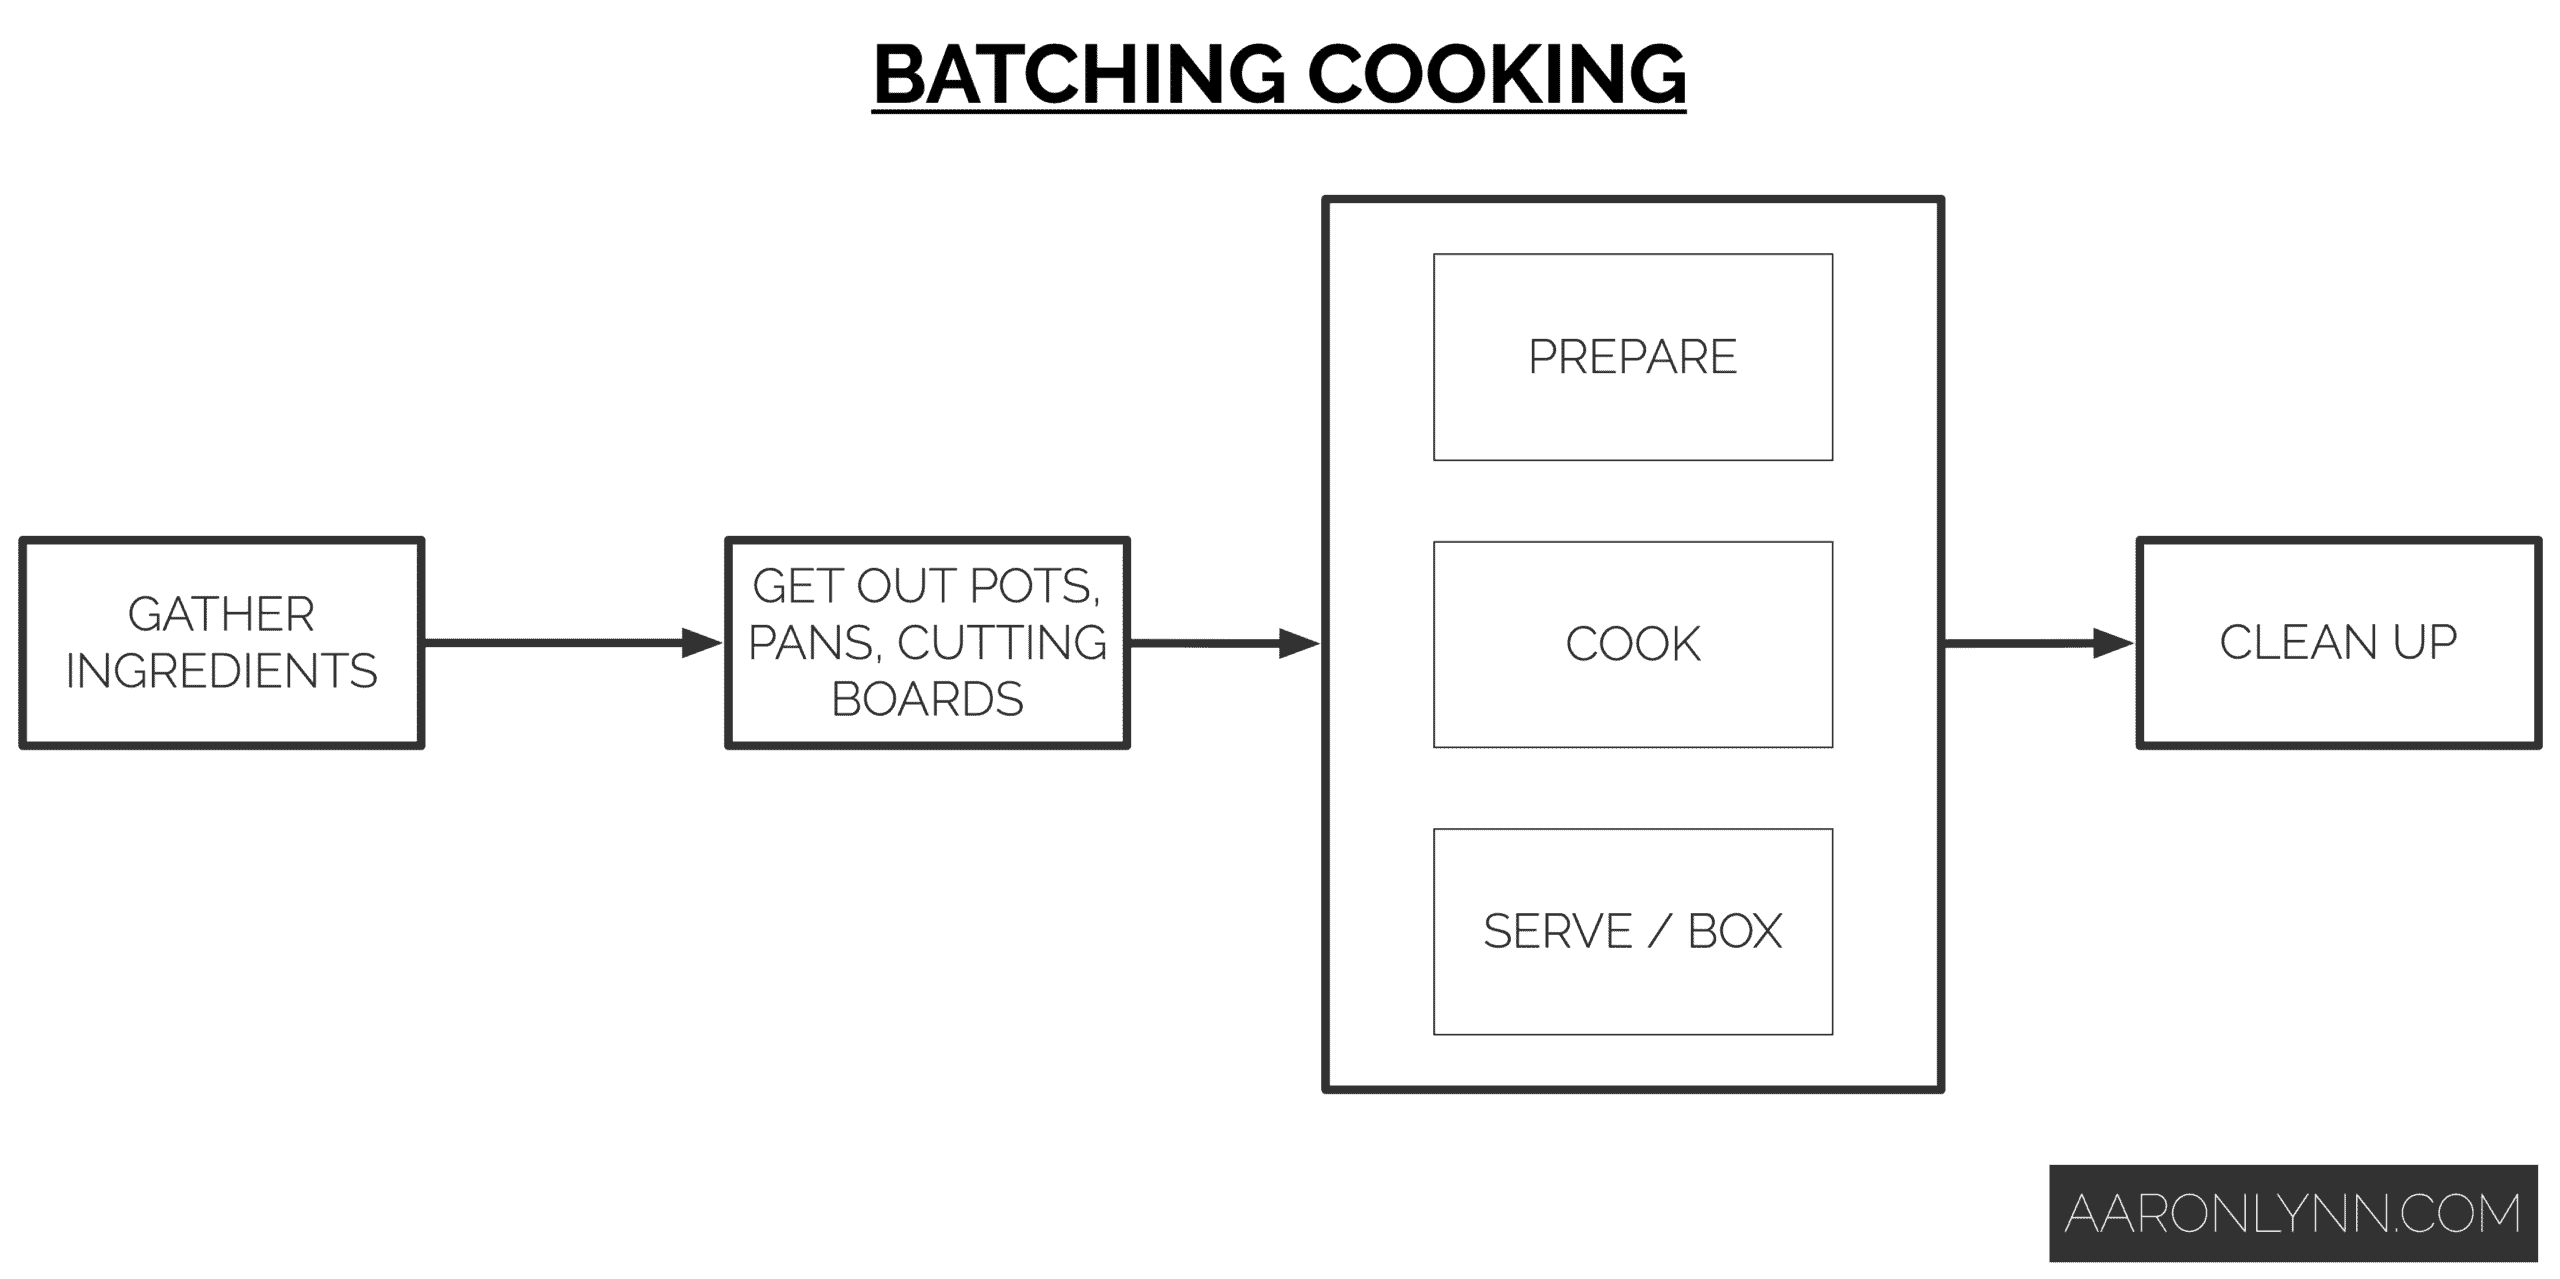 Batching Cooking